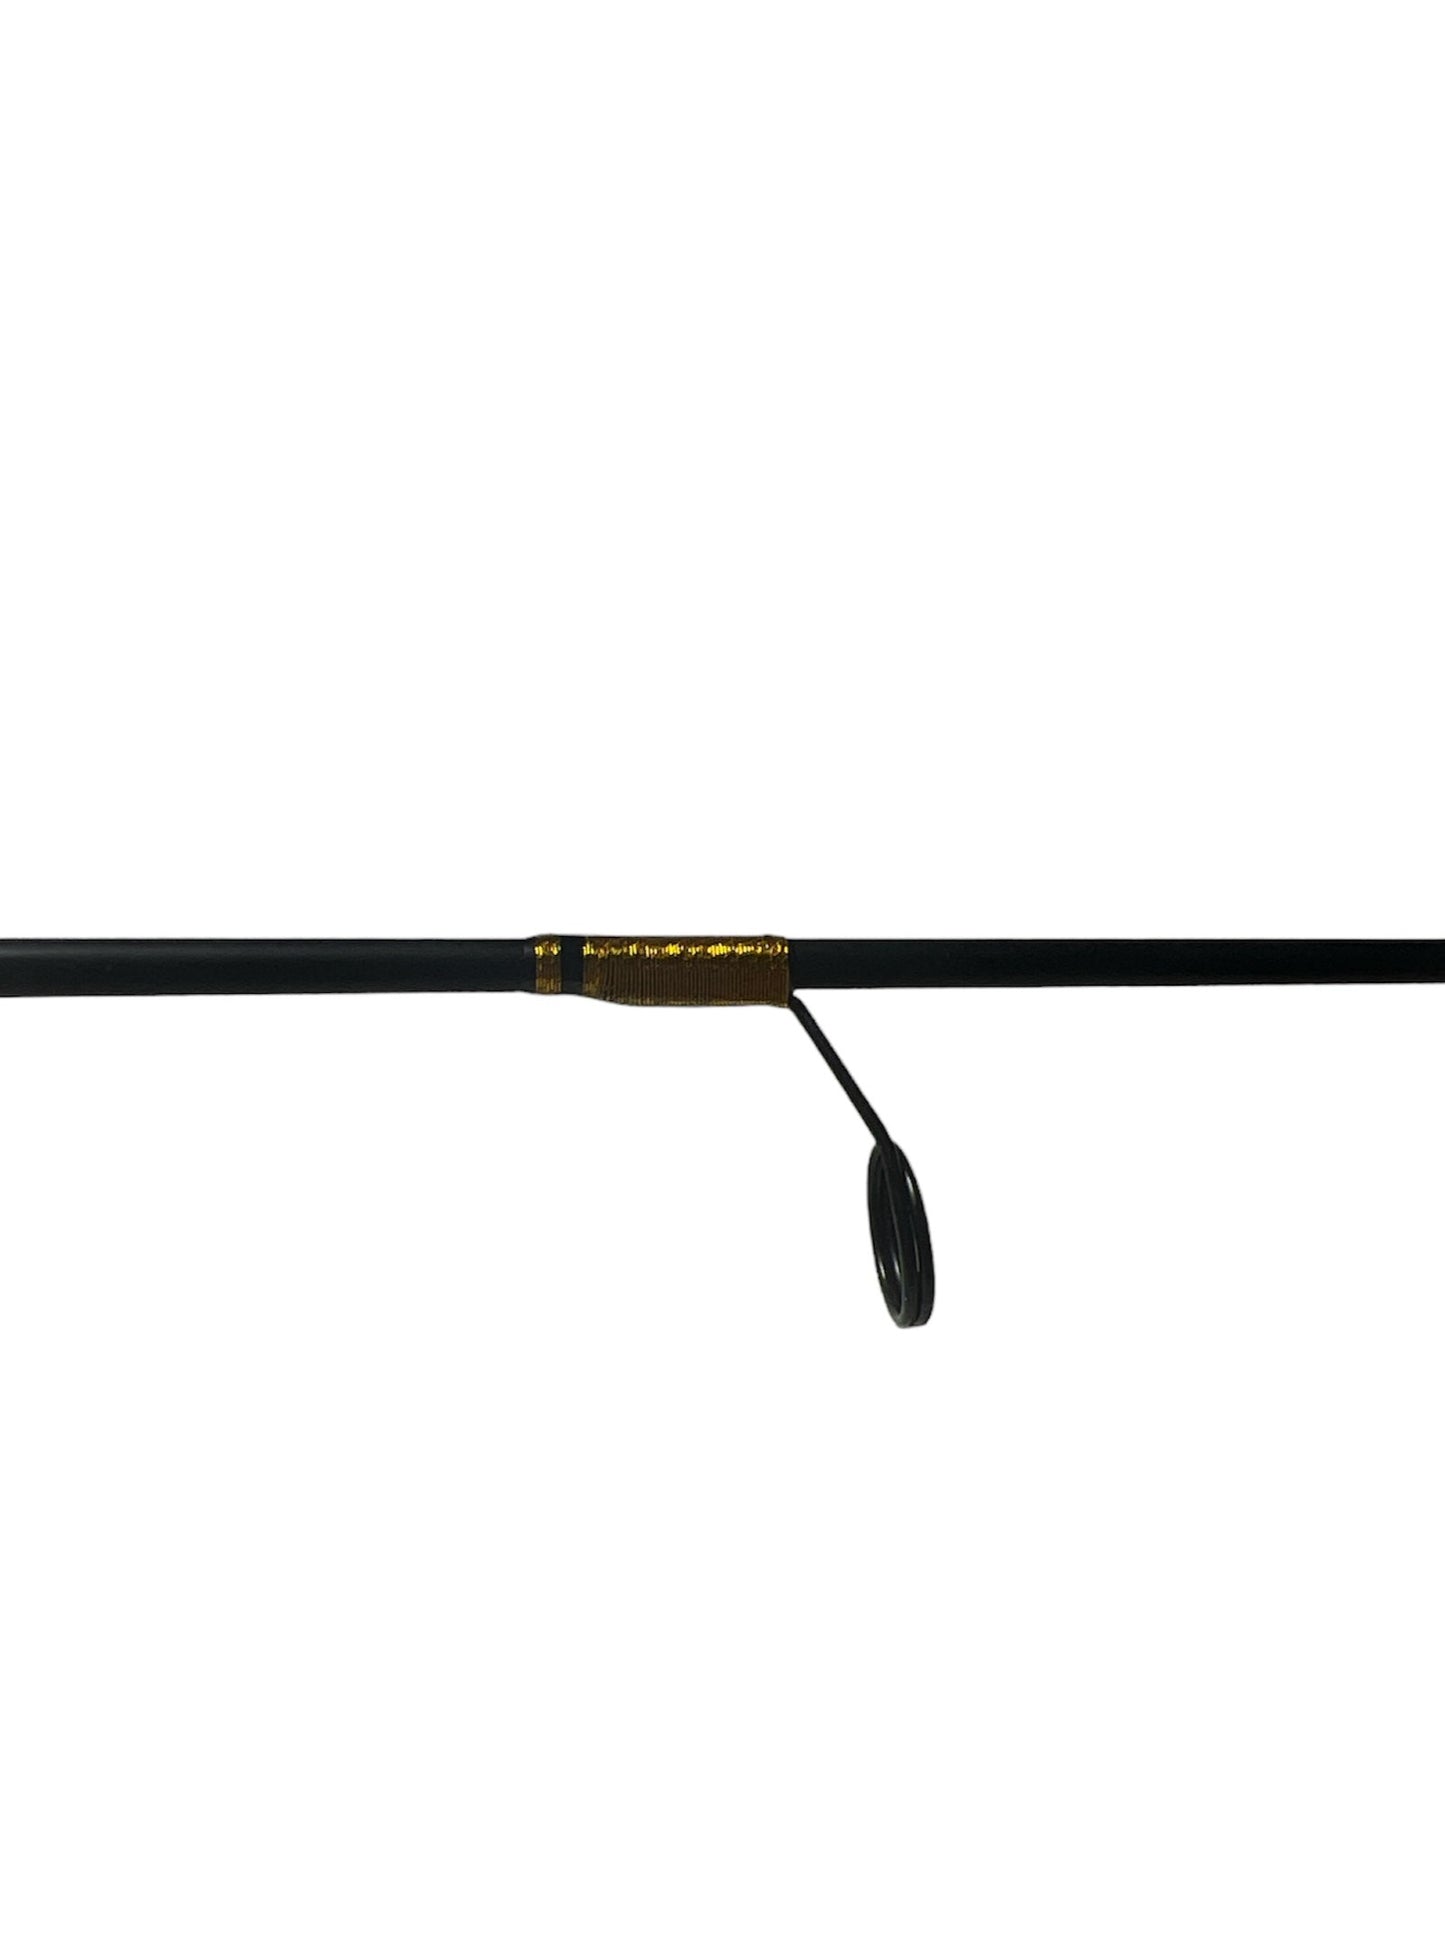 32” Gold & Black Walleye Reaper- Carbon Fiber Handle